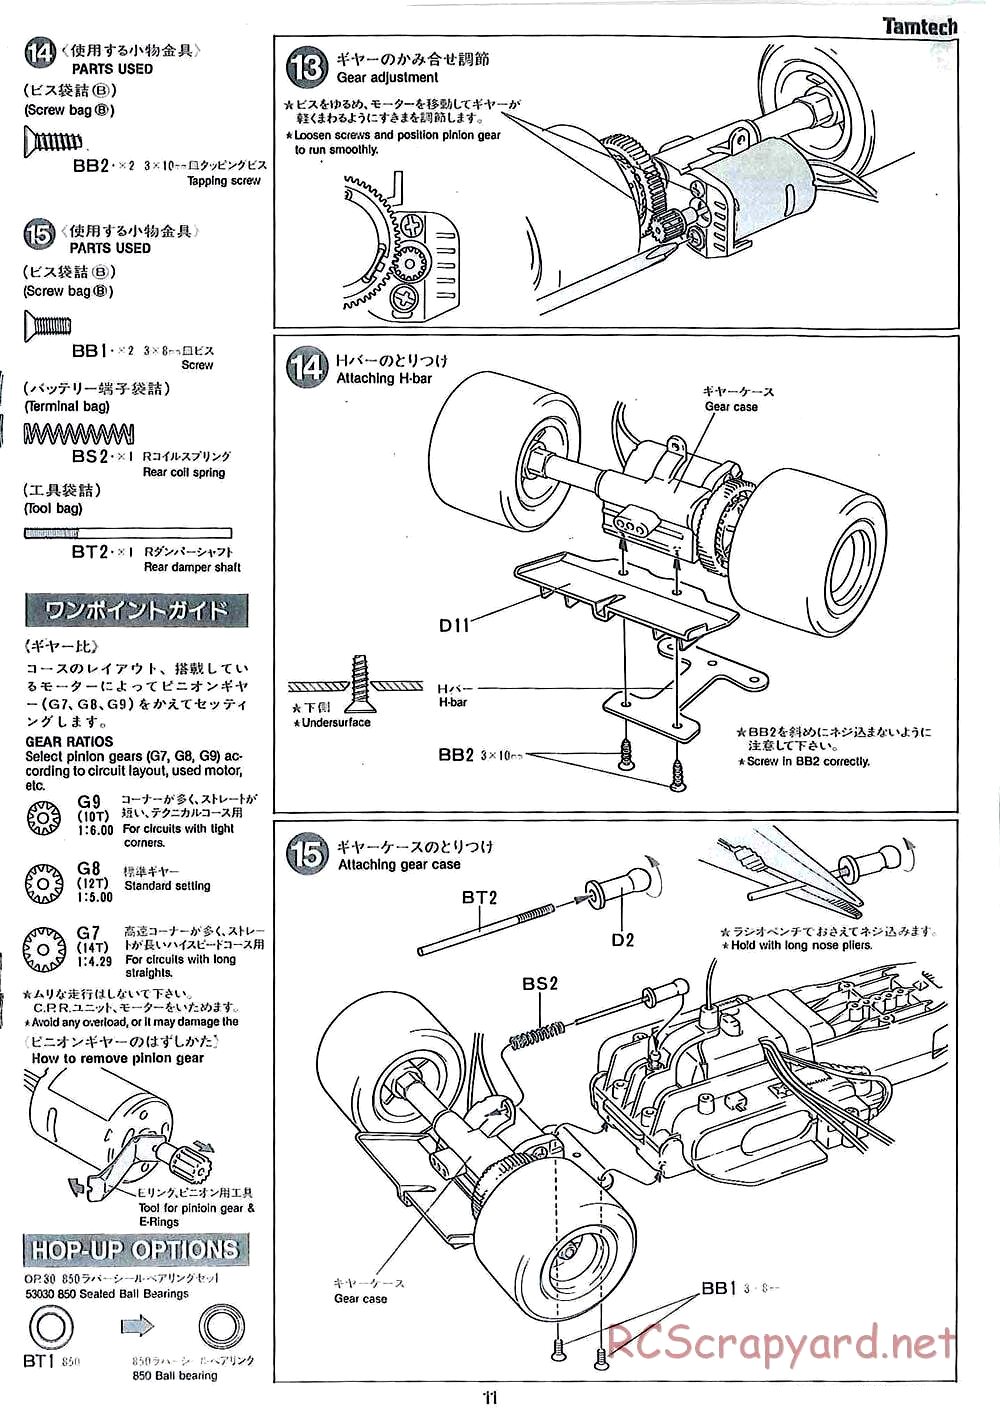 Tamiya - TamTech - F1 Chassis - Manual - Page 11